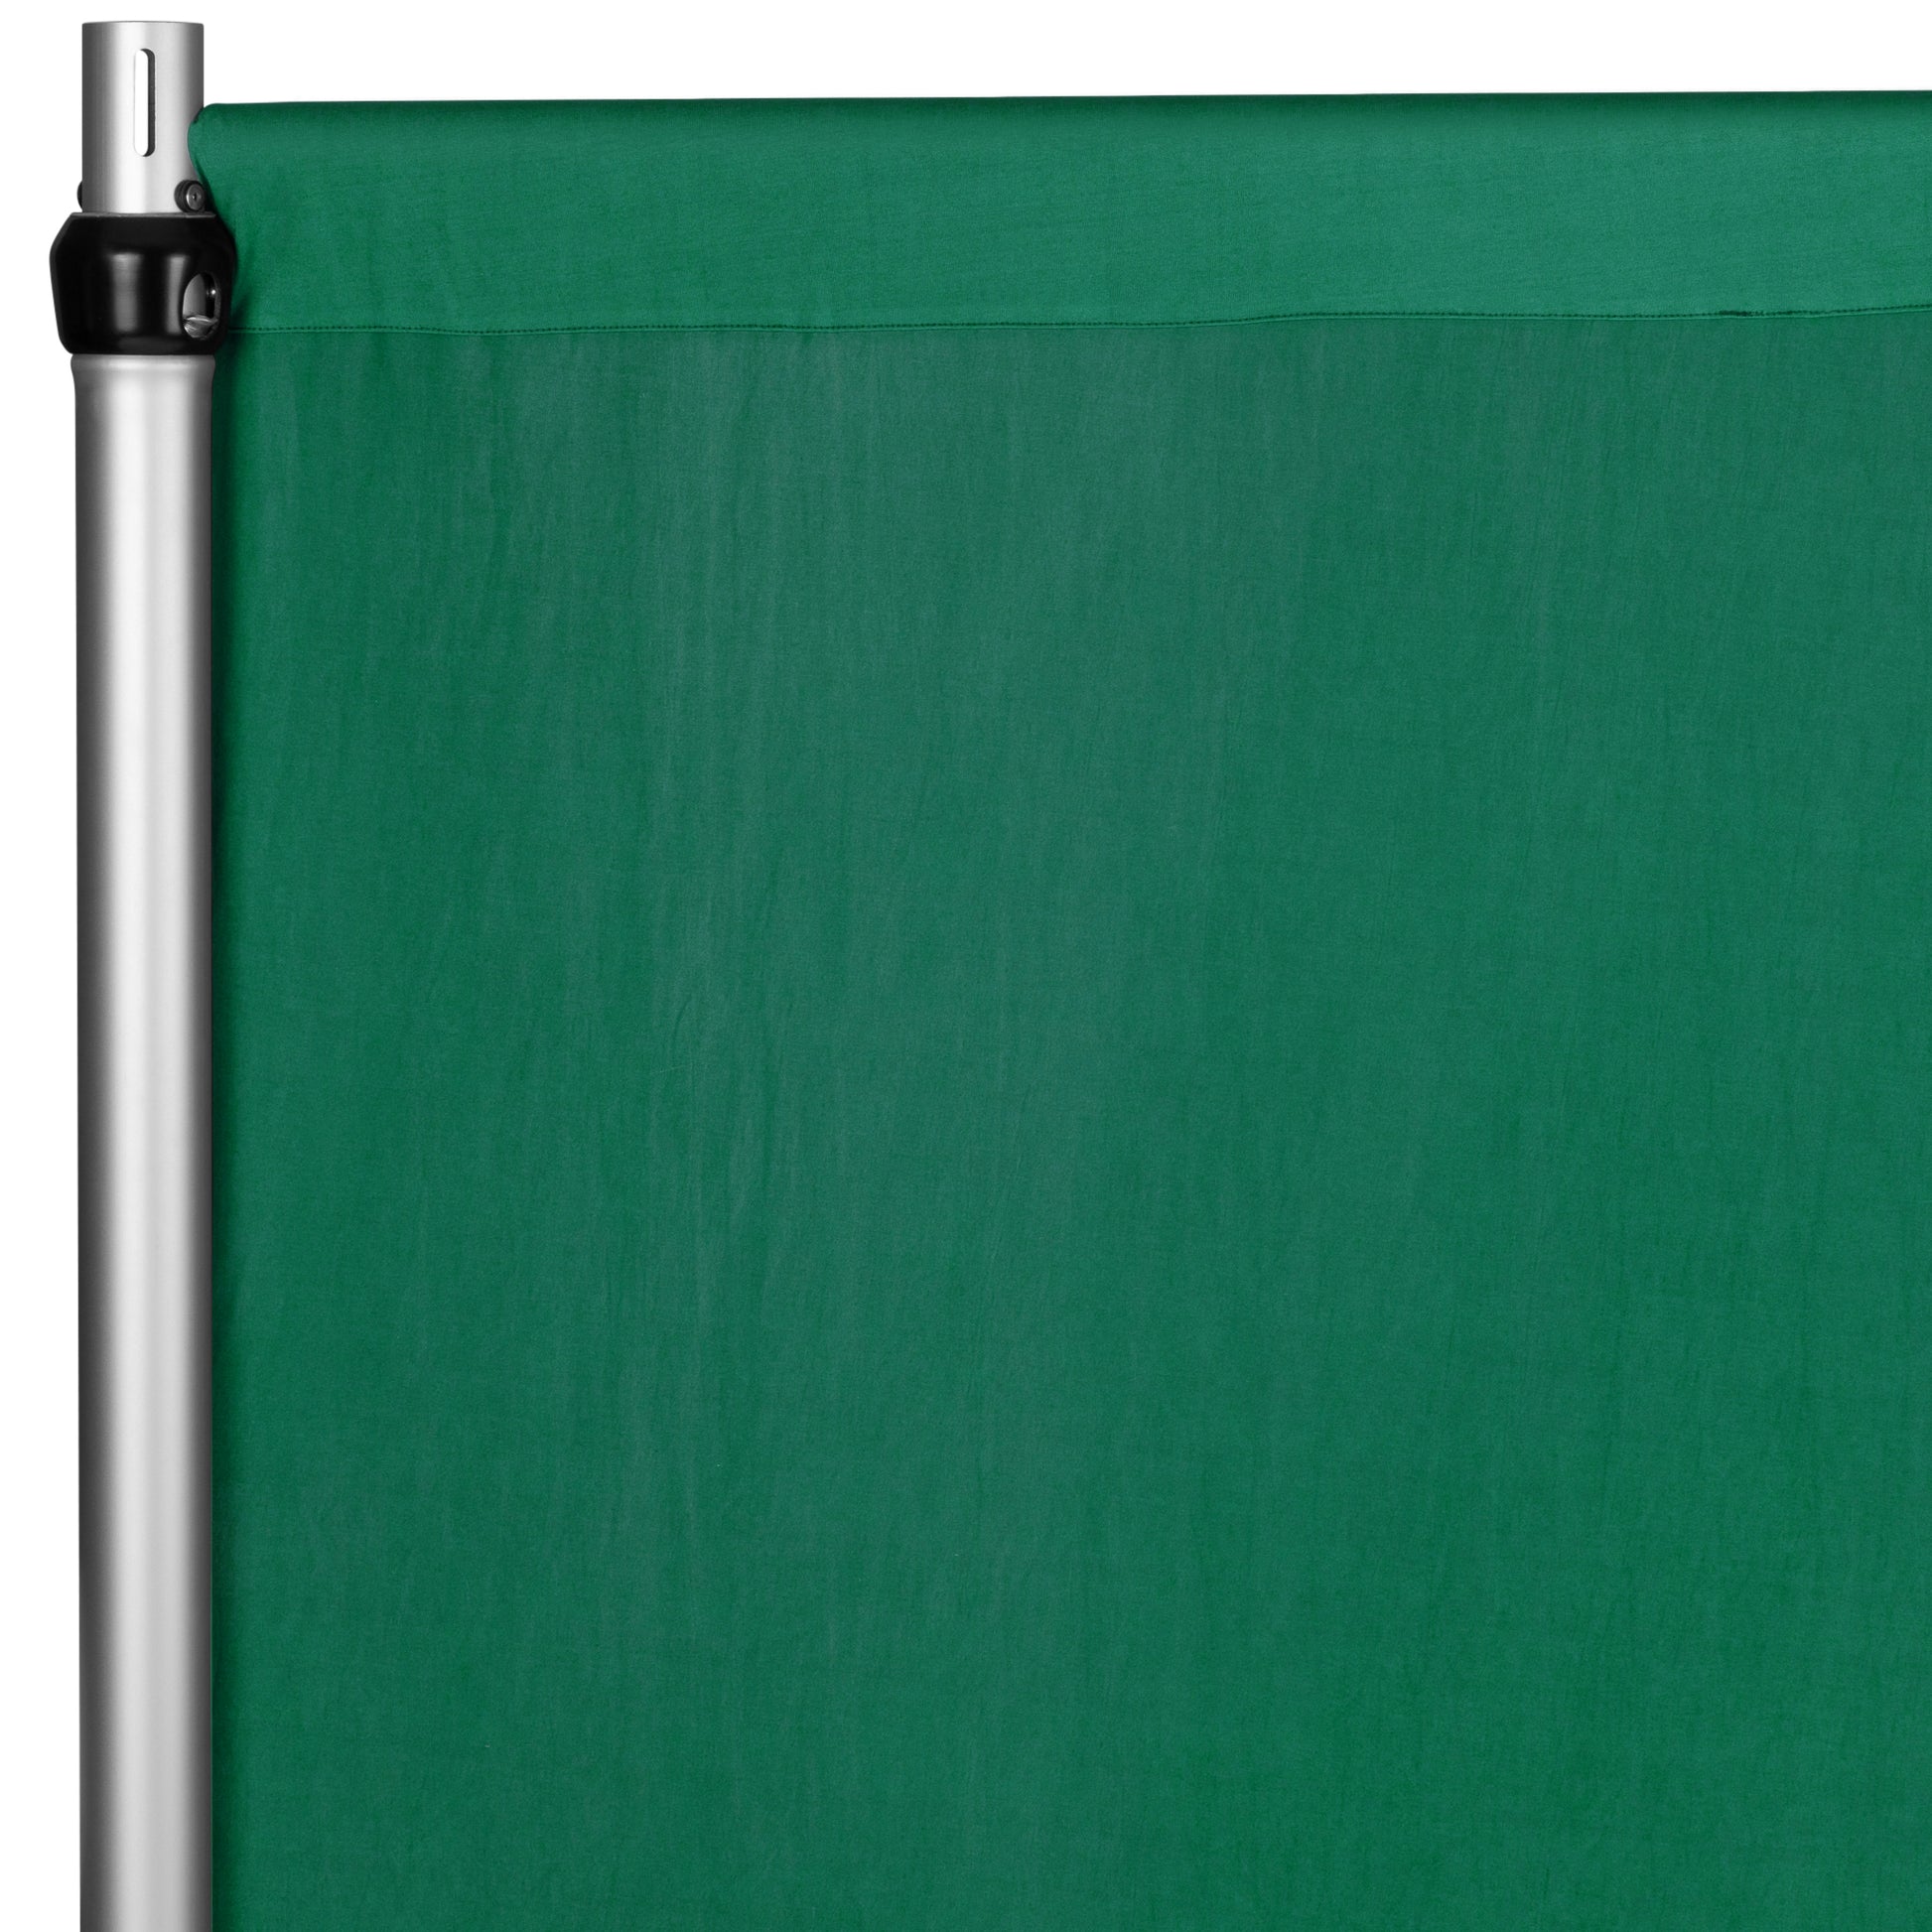 Spandex 4-way Stretch Drape Curtain 12ft H x 60" W - Emerald Green - CV Linens